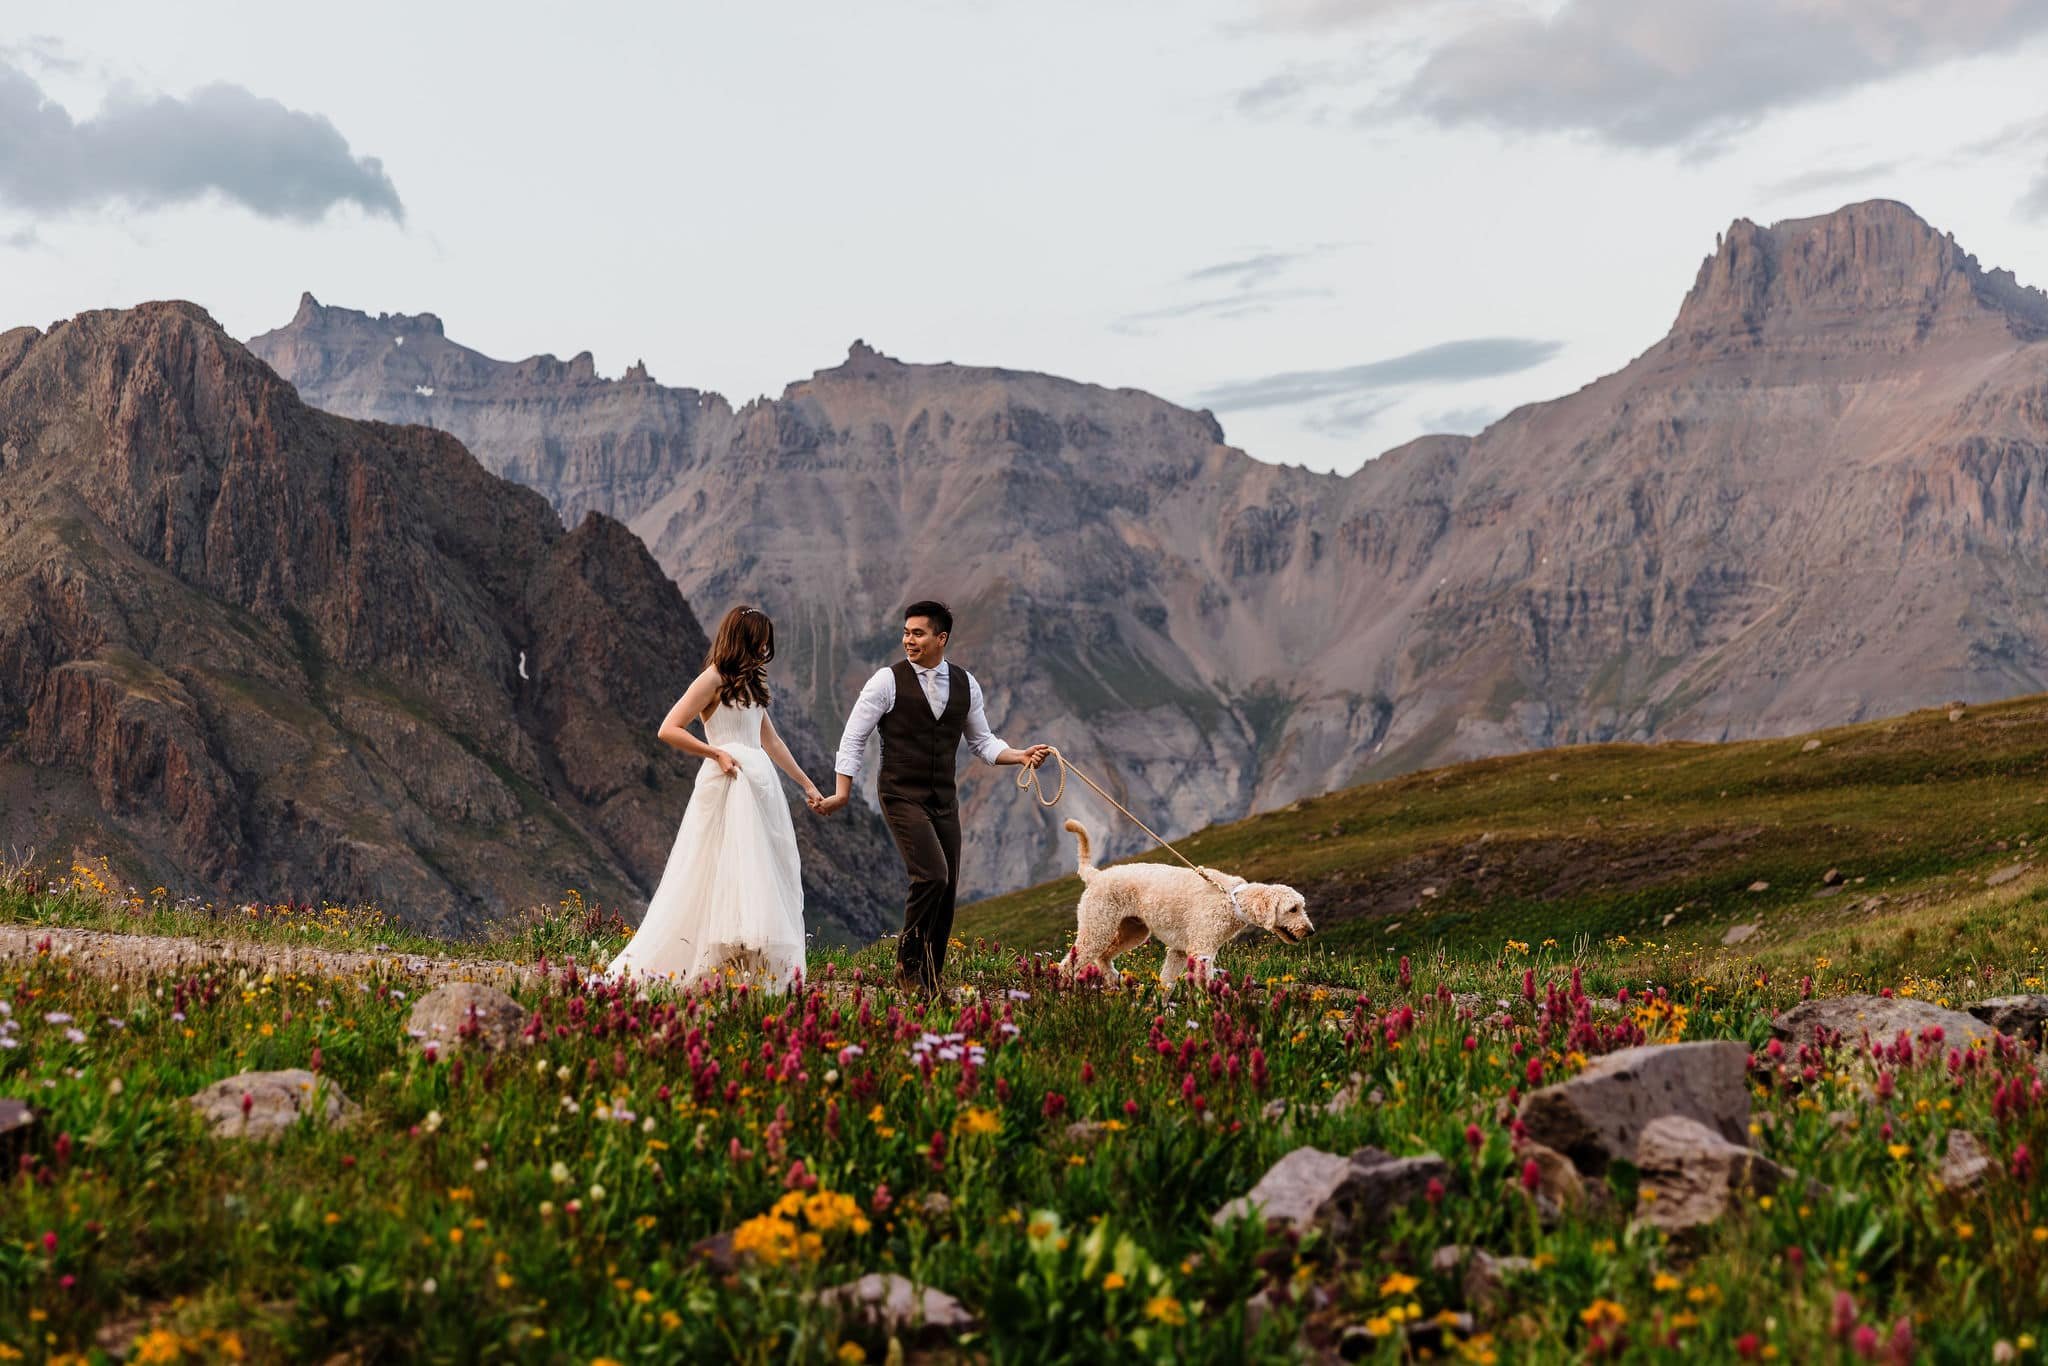 Vow of the Wild Colorado Elopement Photographer + Videographer